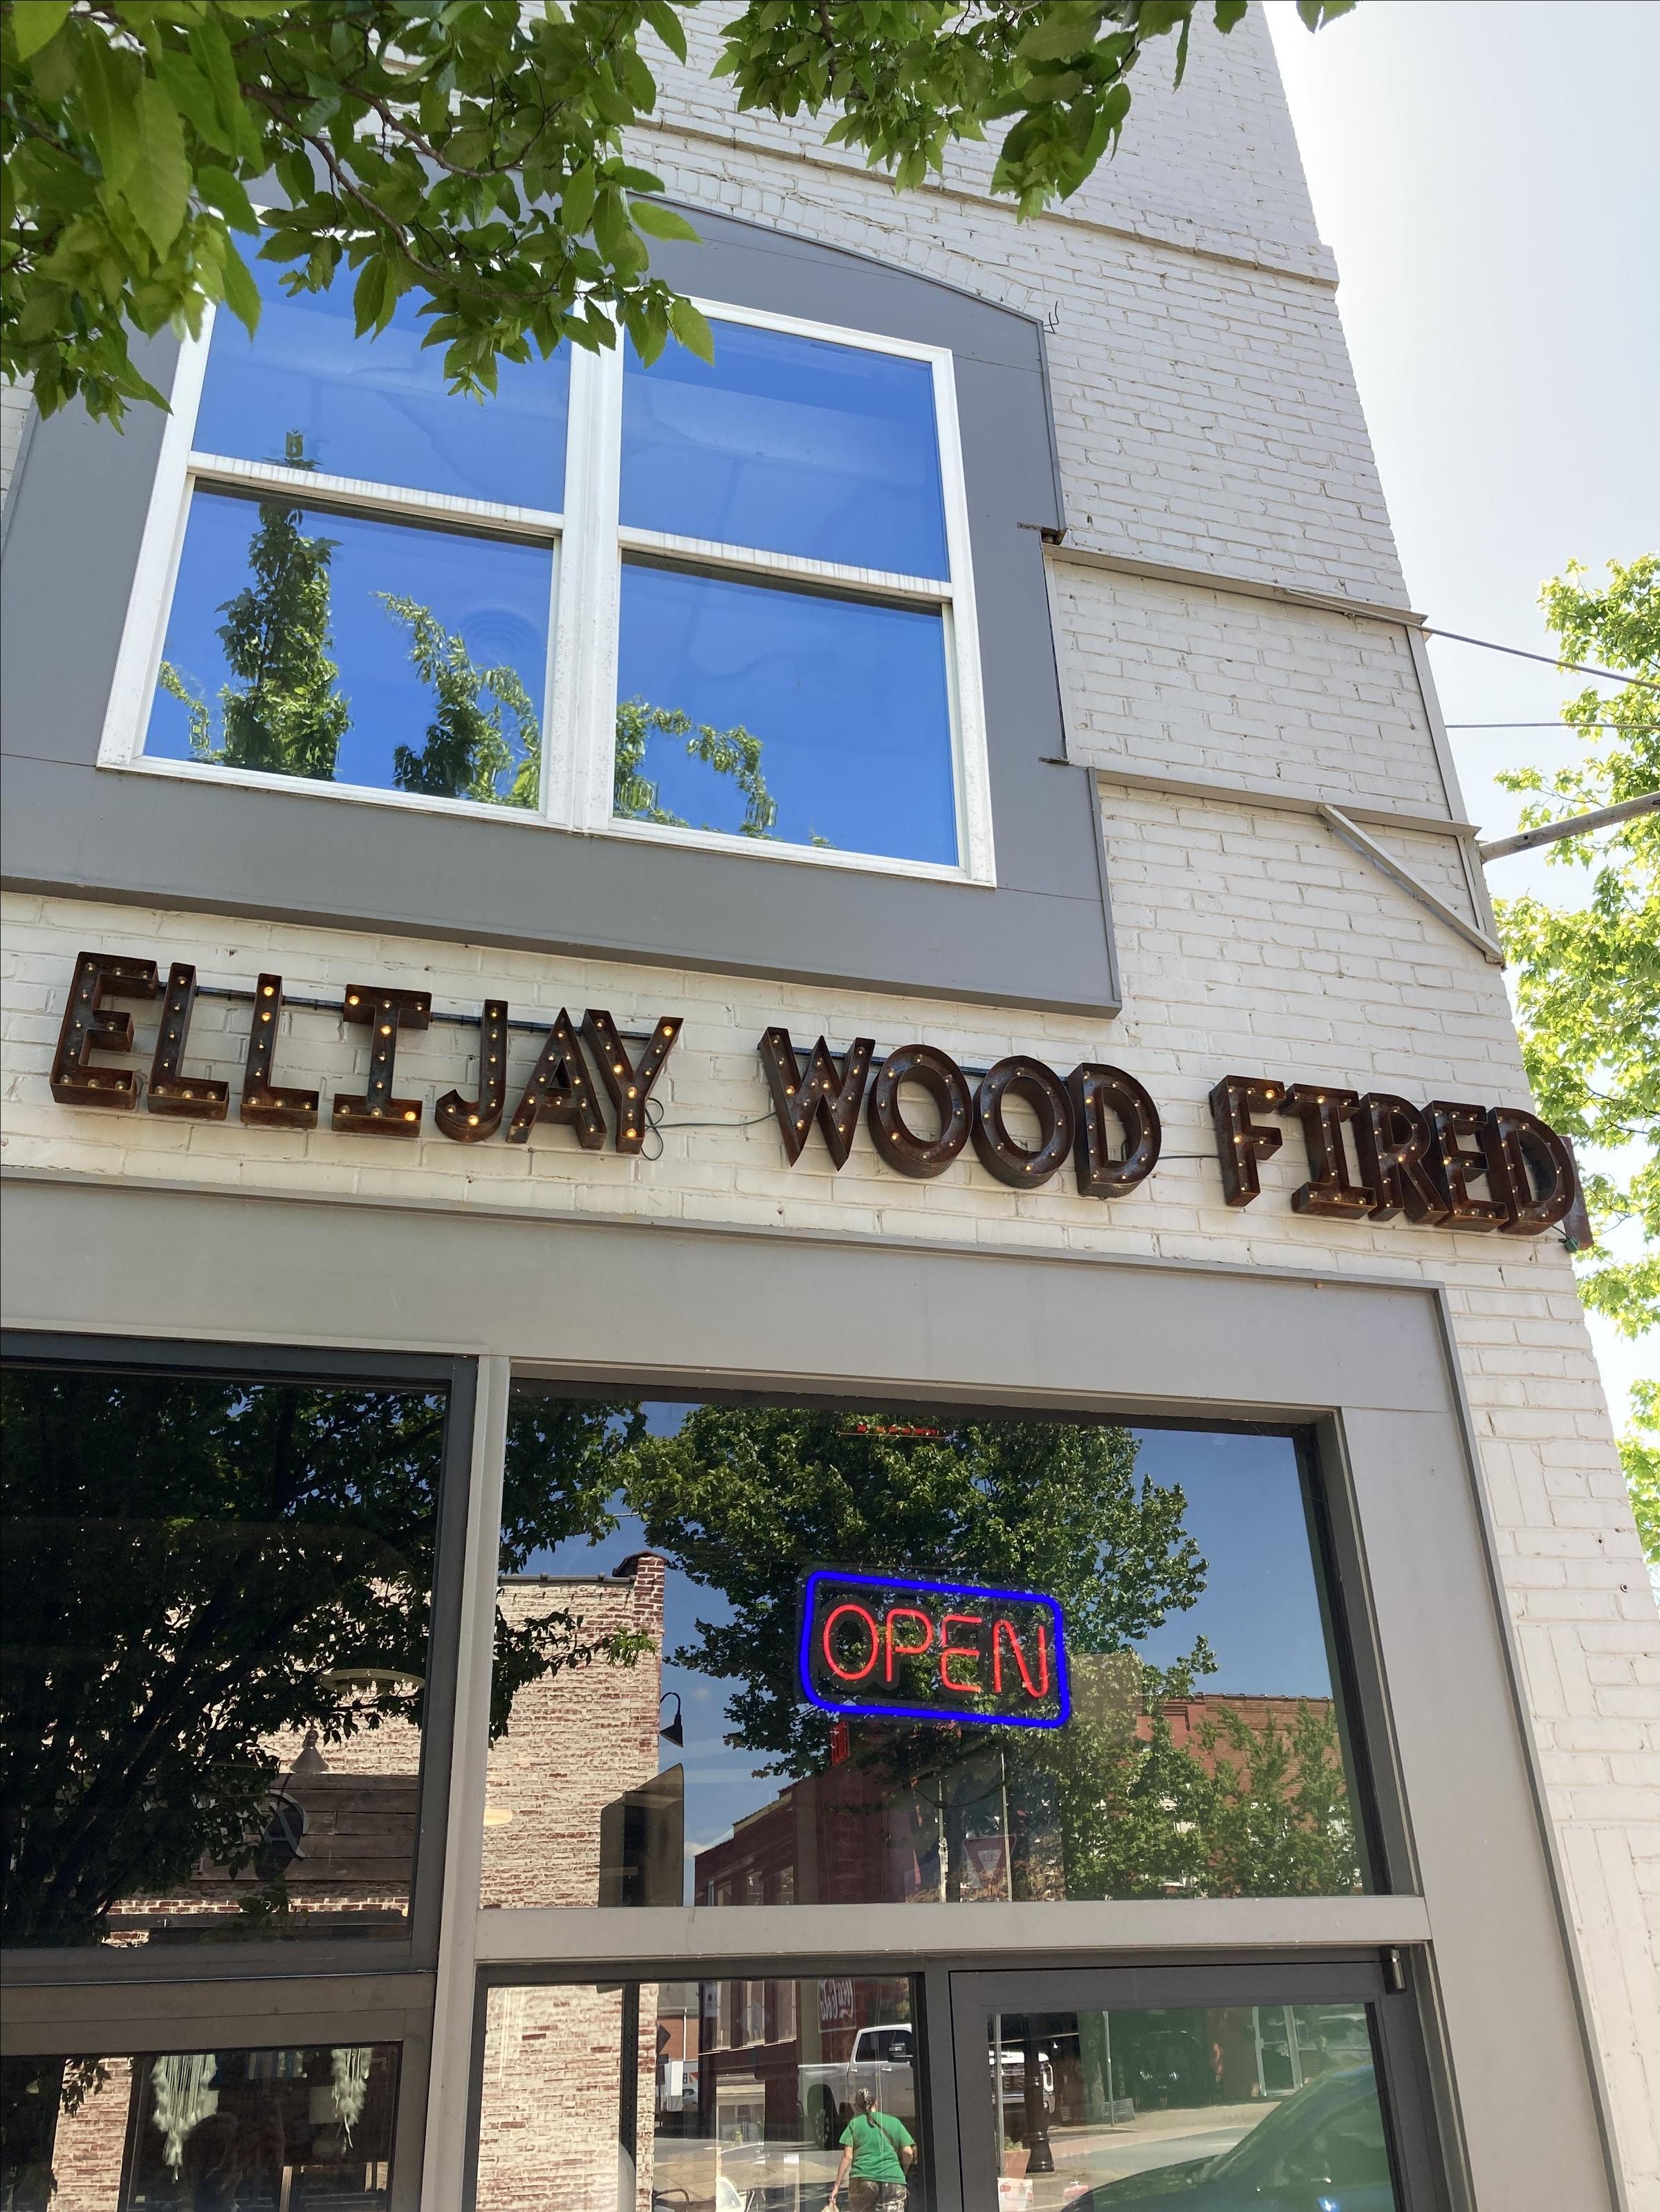 Pet Friendly Ellijay Wood Fired Pizza